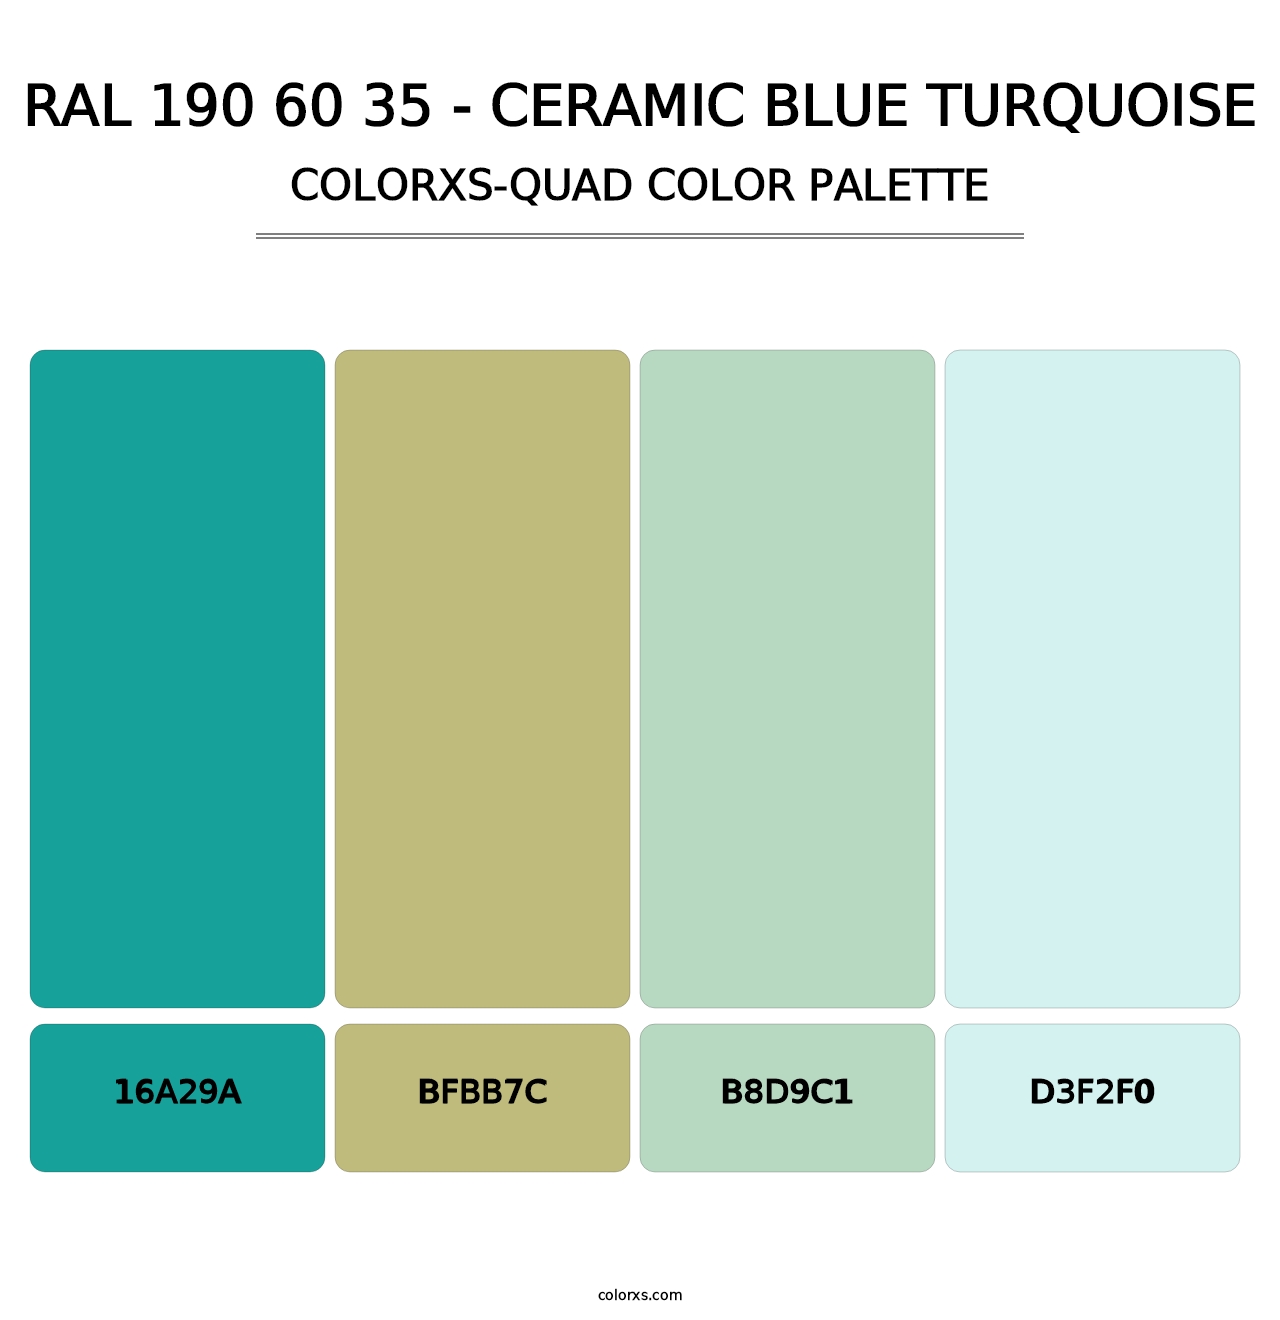 RAL 190 60 35 - Ceramic Blue Turquoise - Colorxs Quad Palette